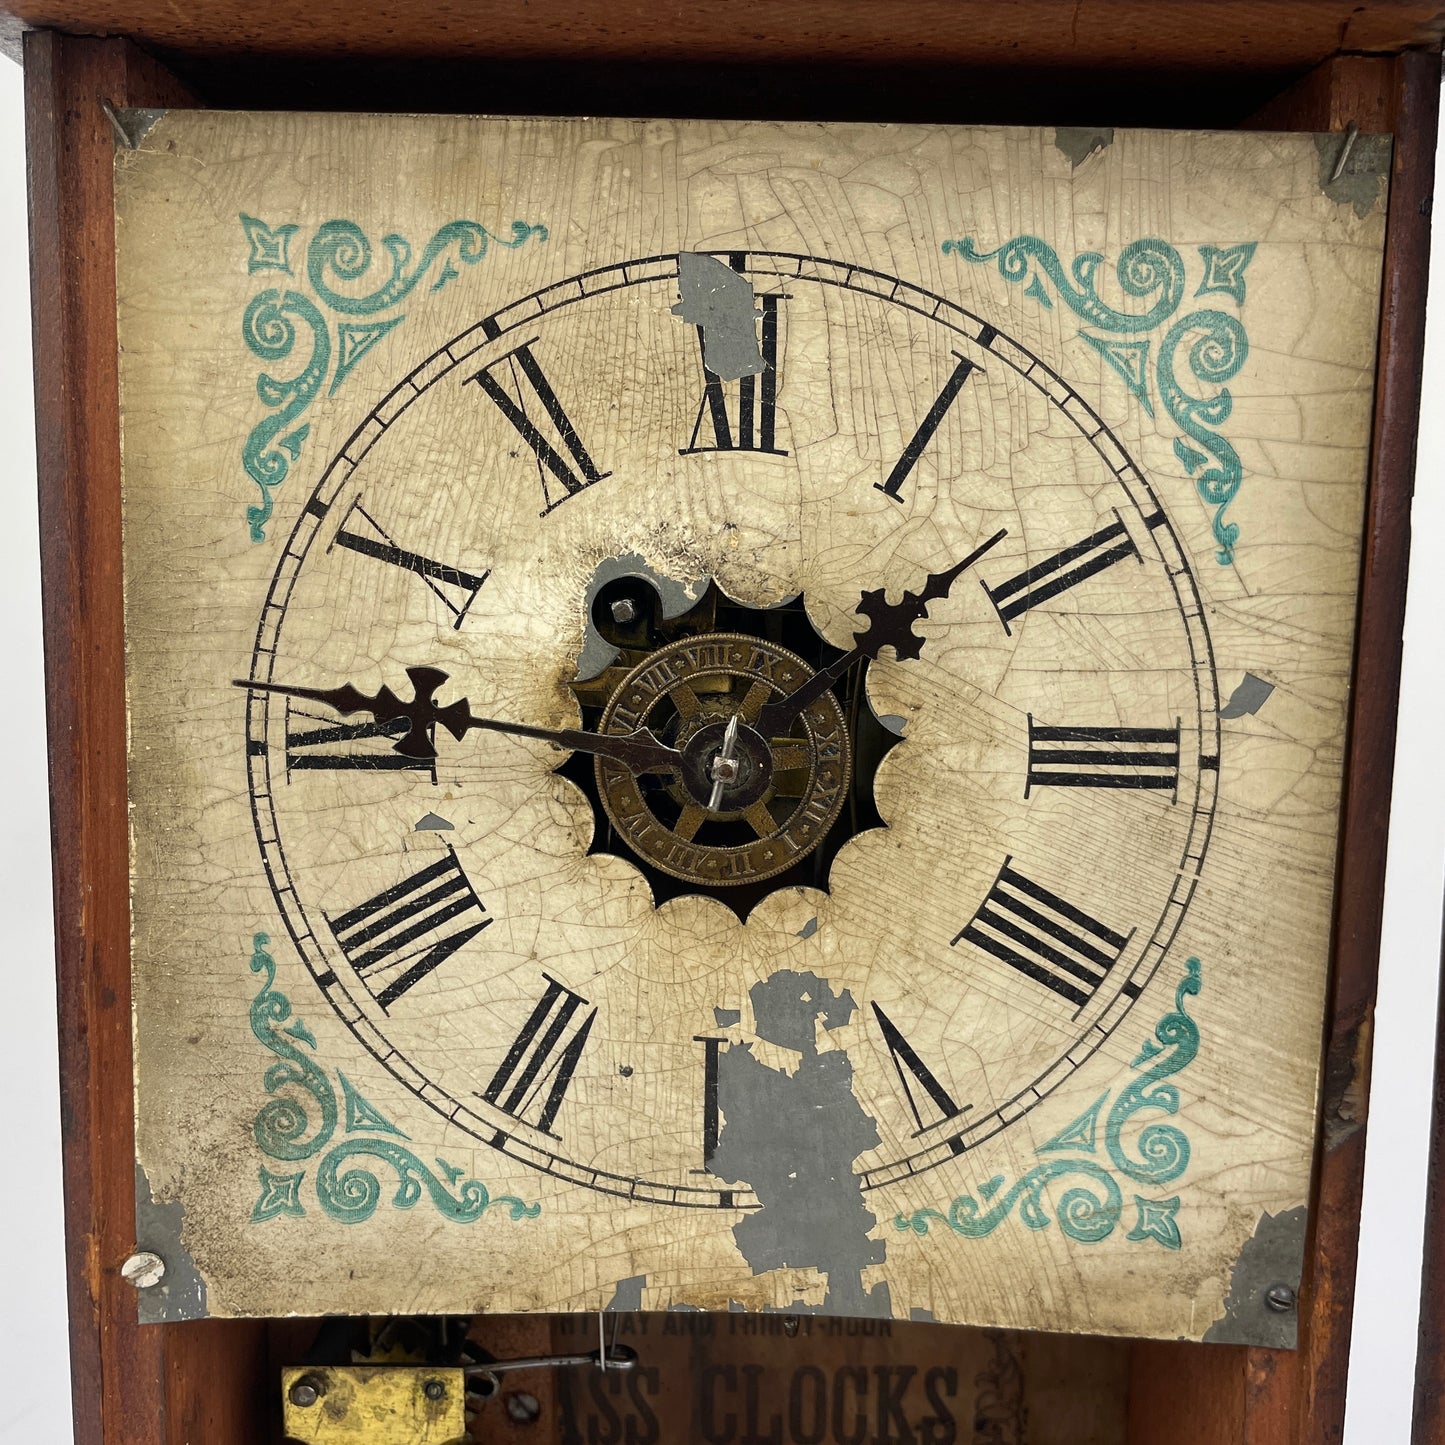 Lot 67- Waterbury | Time & Alarm | 30-Hr | Cottage Clock